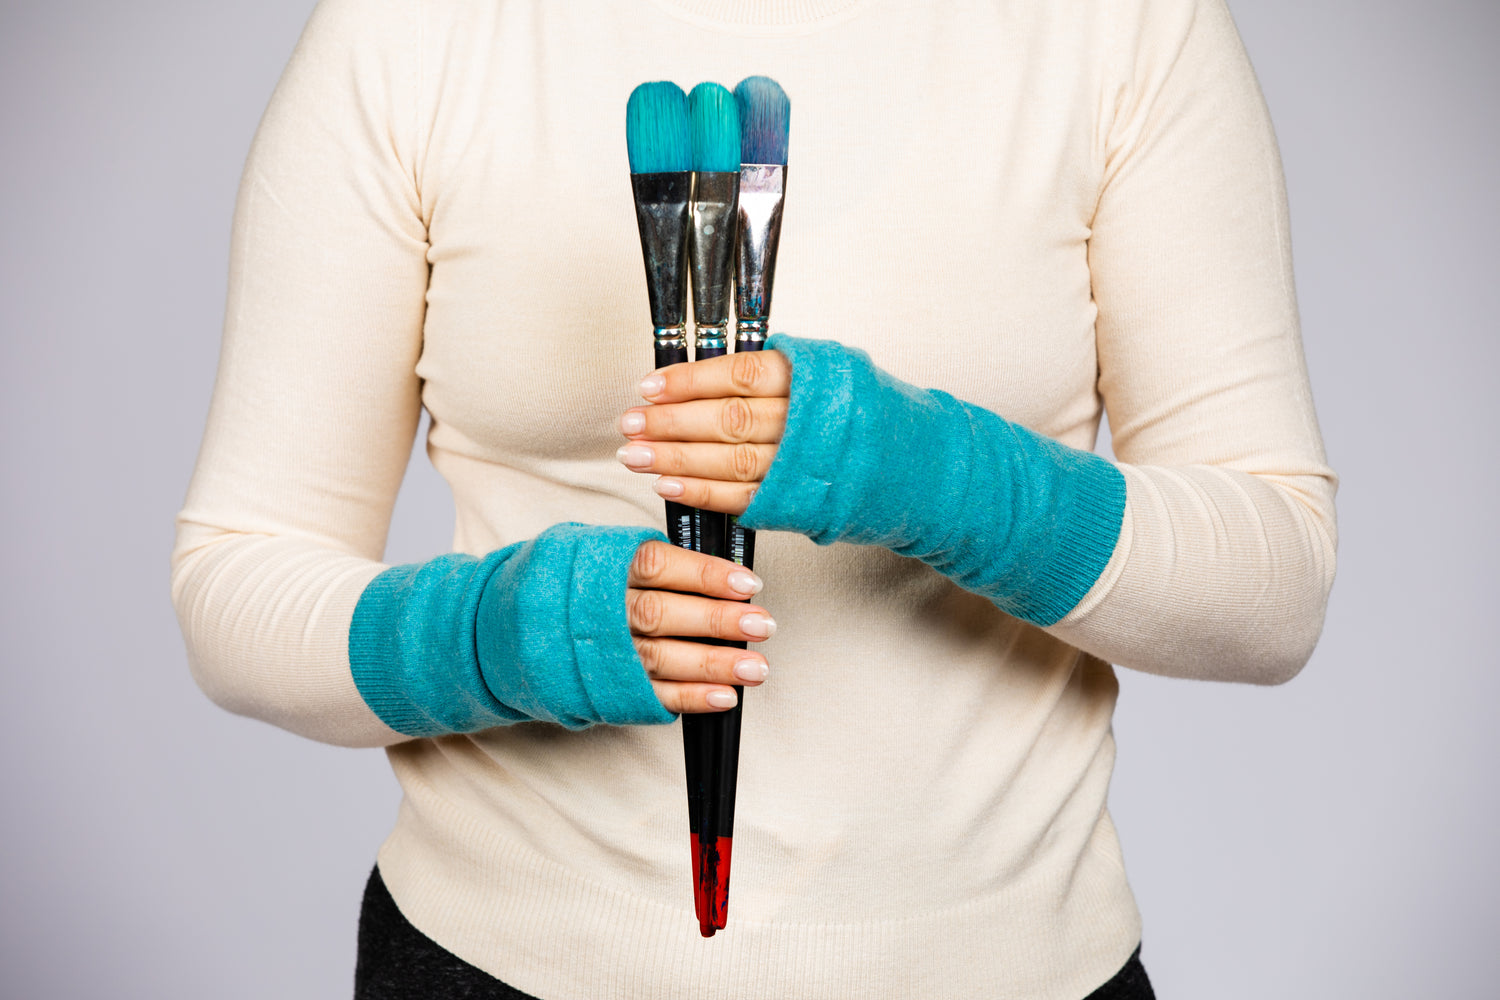 Teal Blue - Cashmere Fingerless Gloves